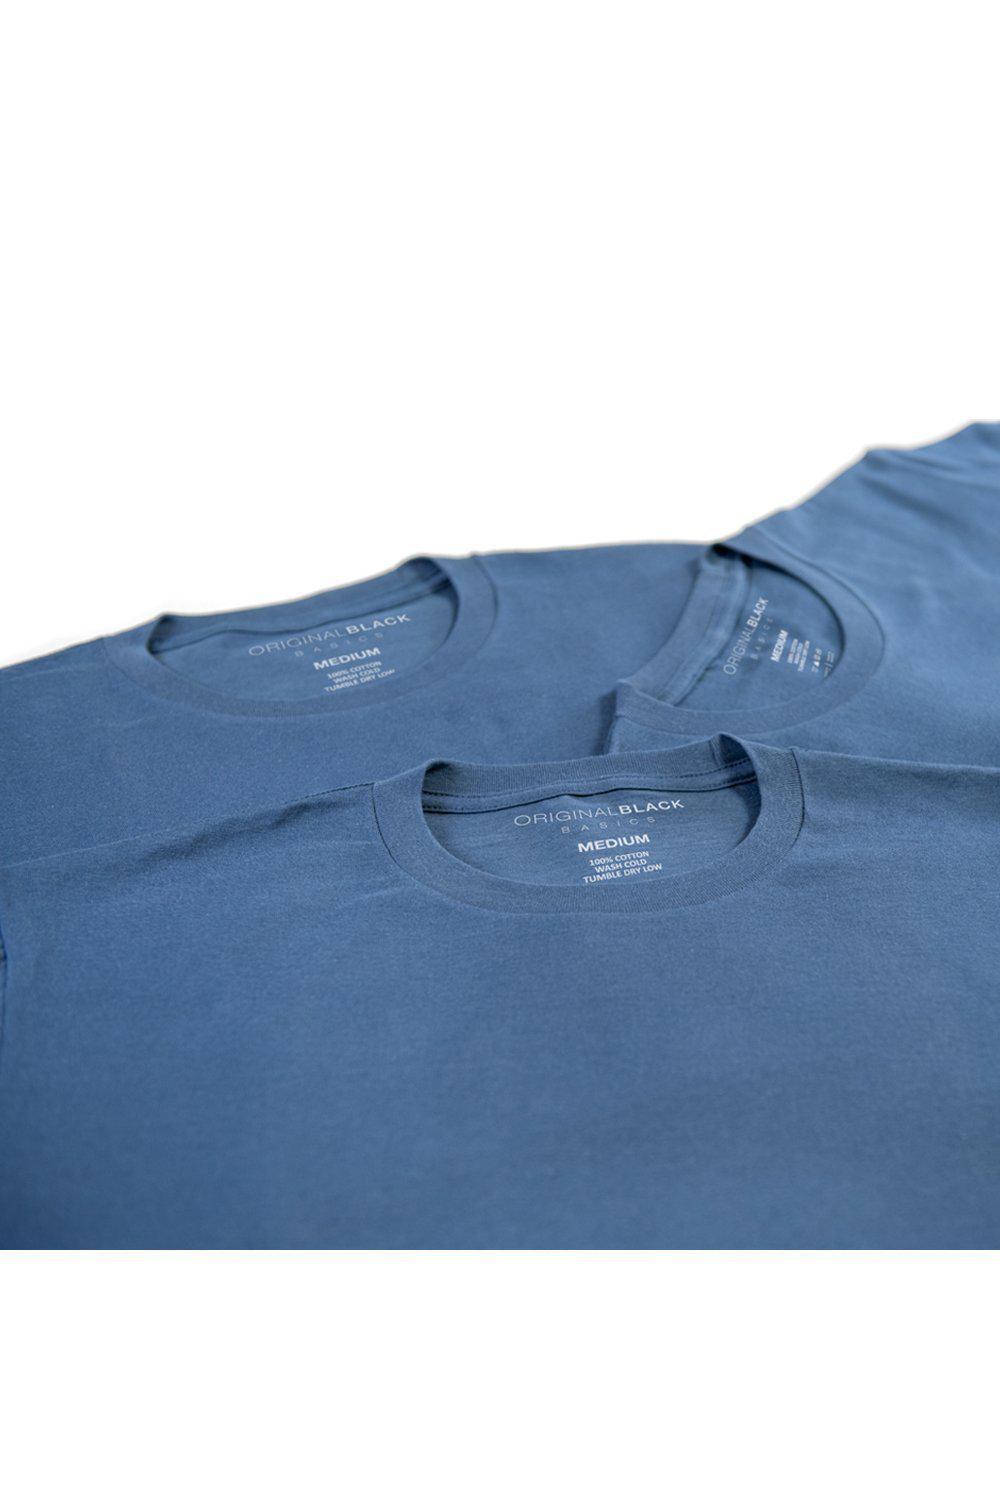 Crew Neck T-shirt 3 Pack - Navy-CottonLinks+CA